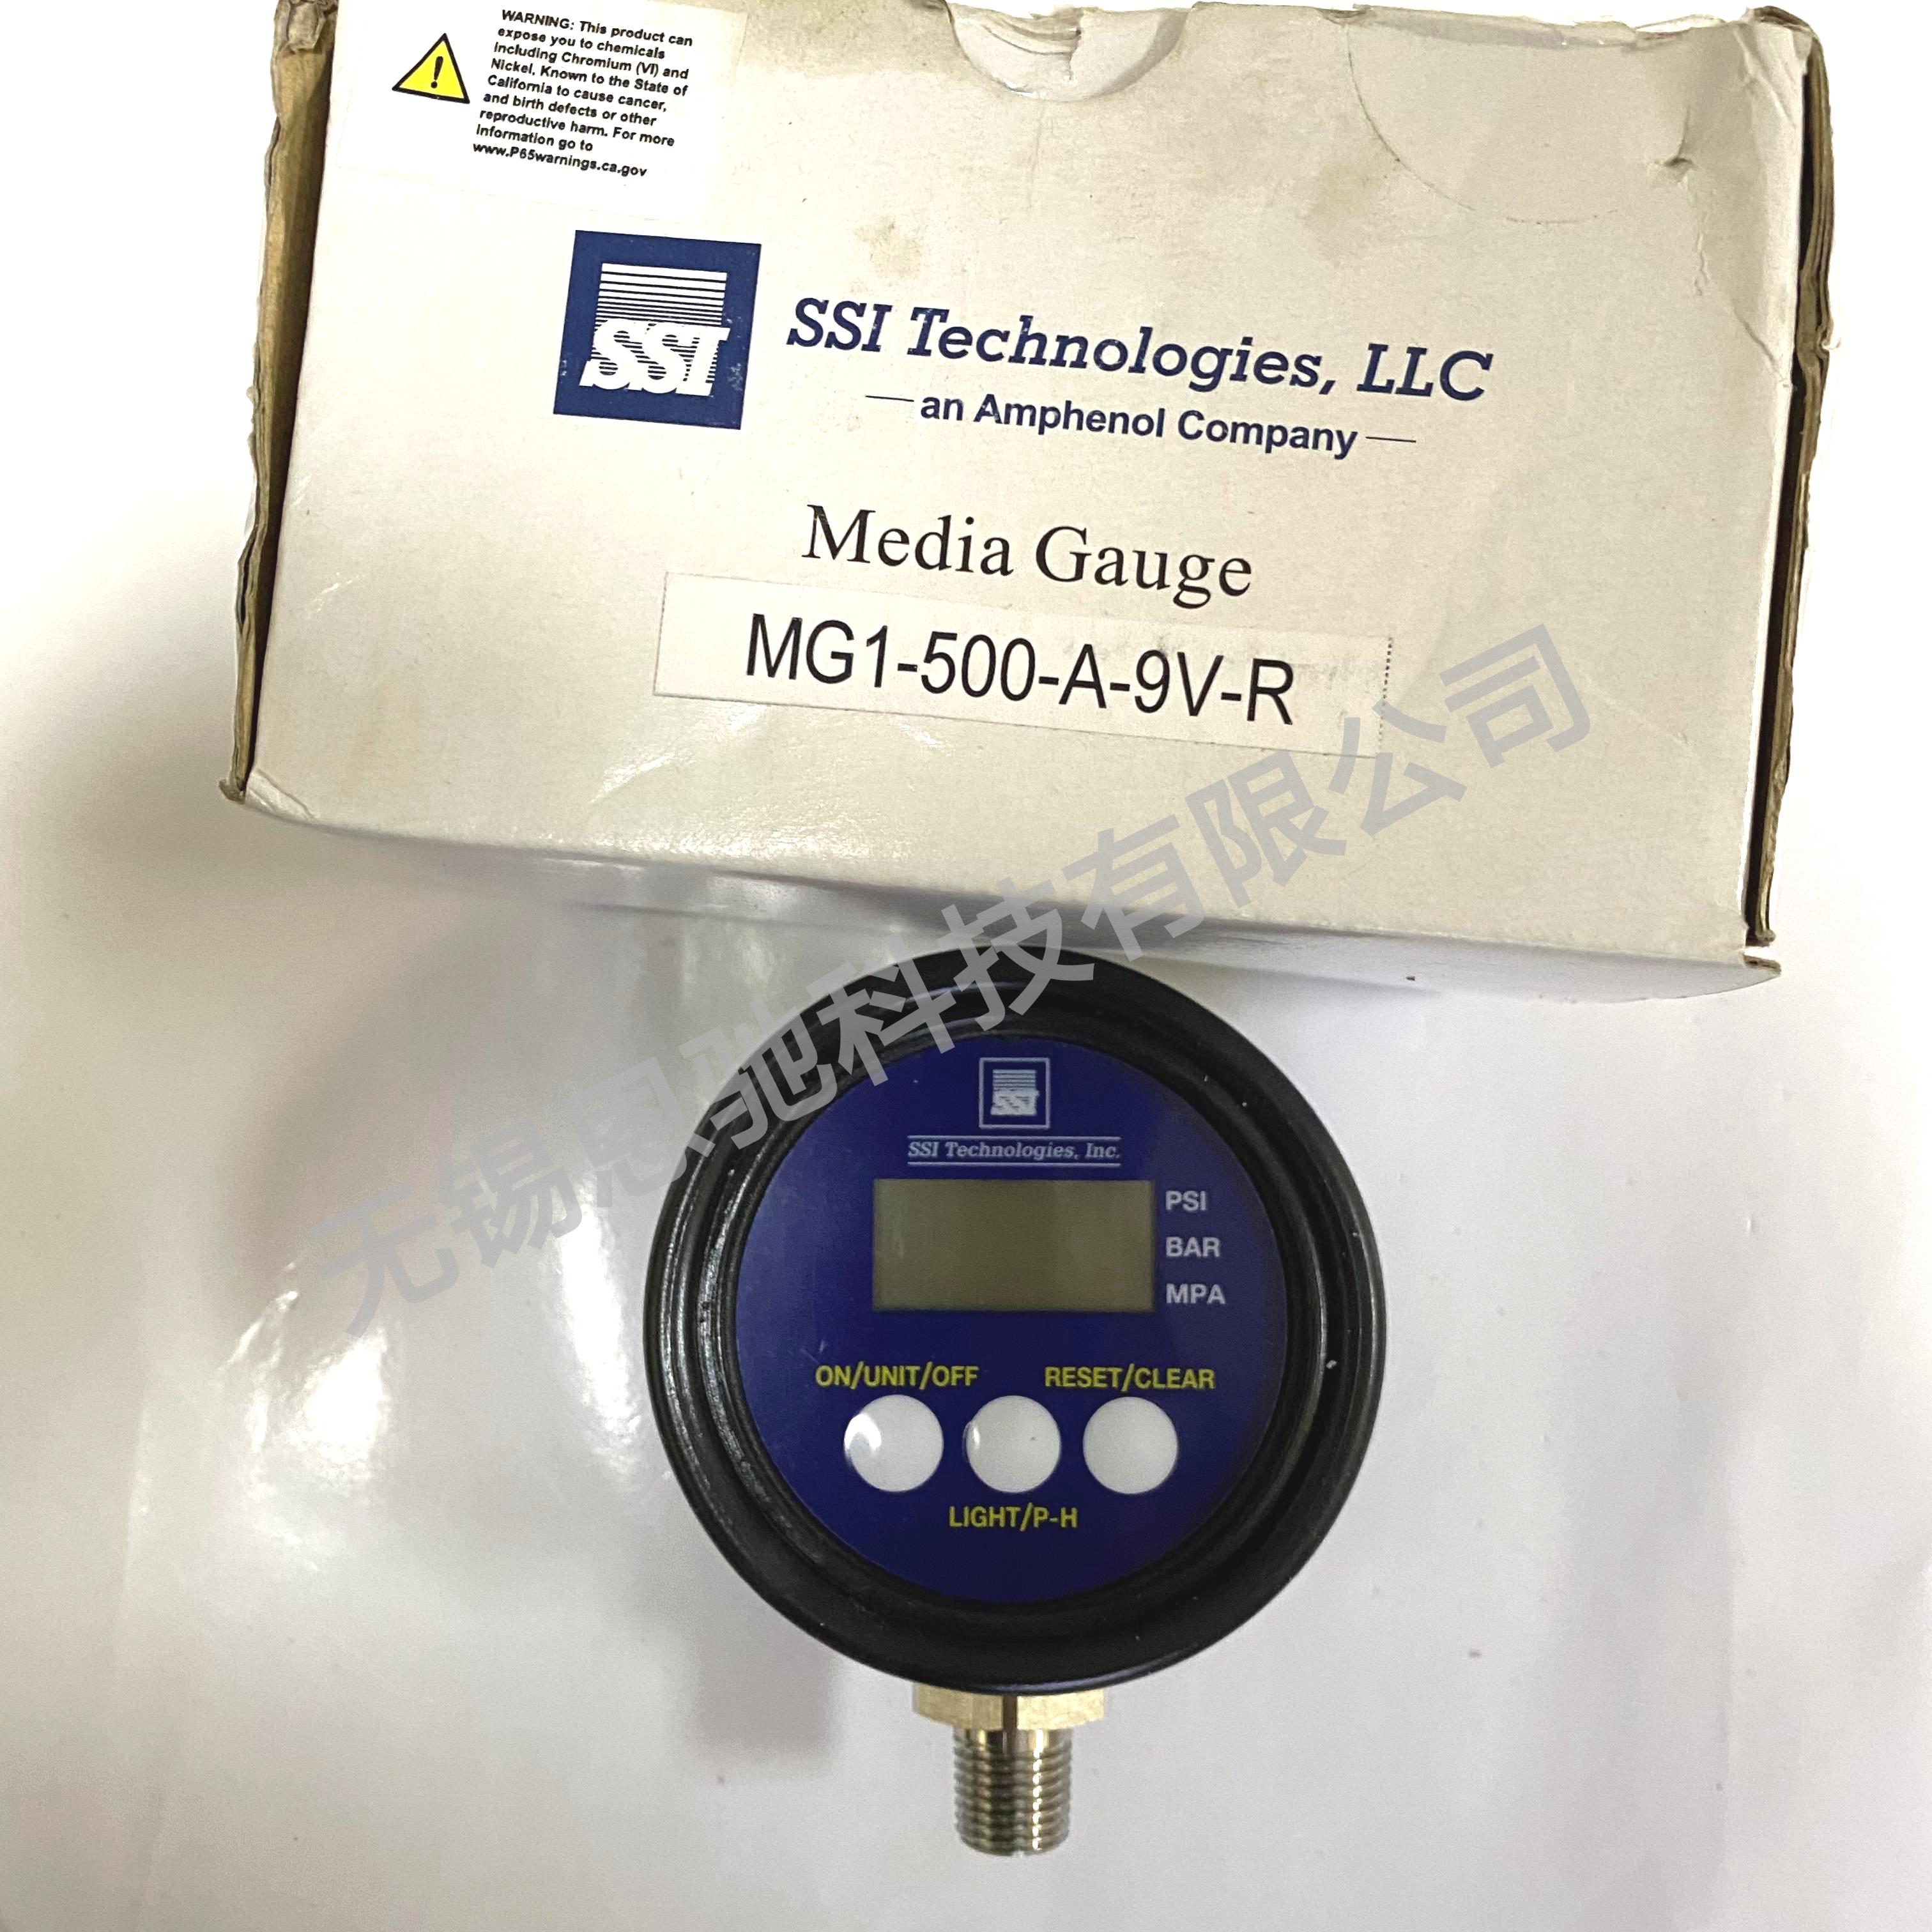 Amphenol/SSI Tech数字压力表MG1-500-A-9V-R 0-500psi 1/4i